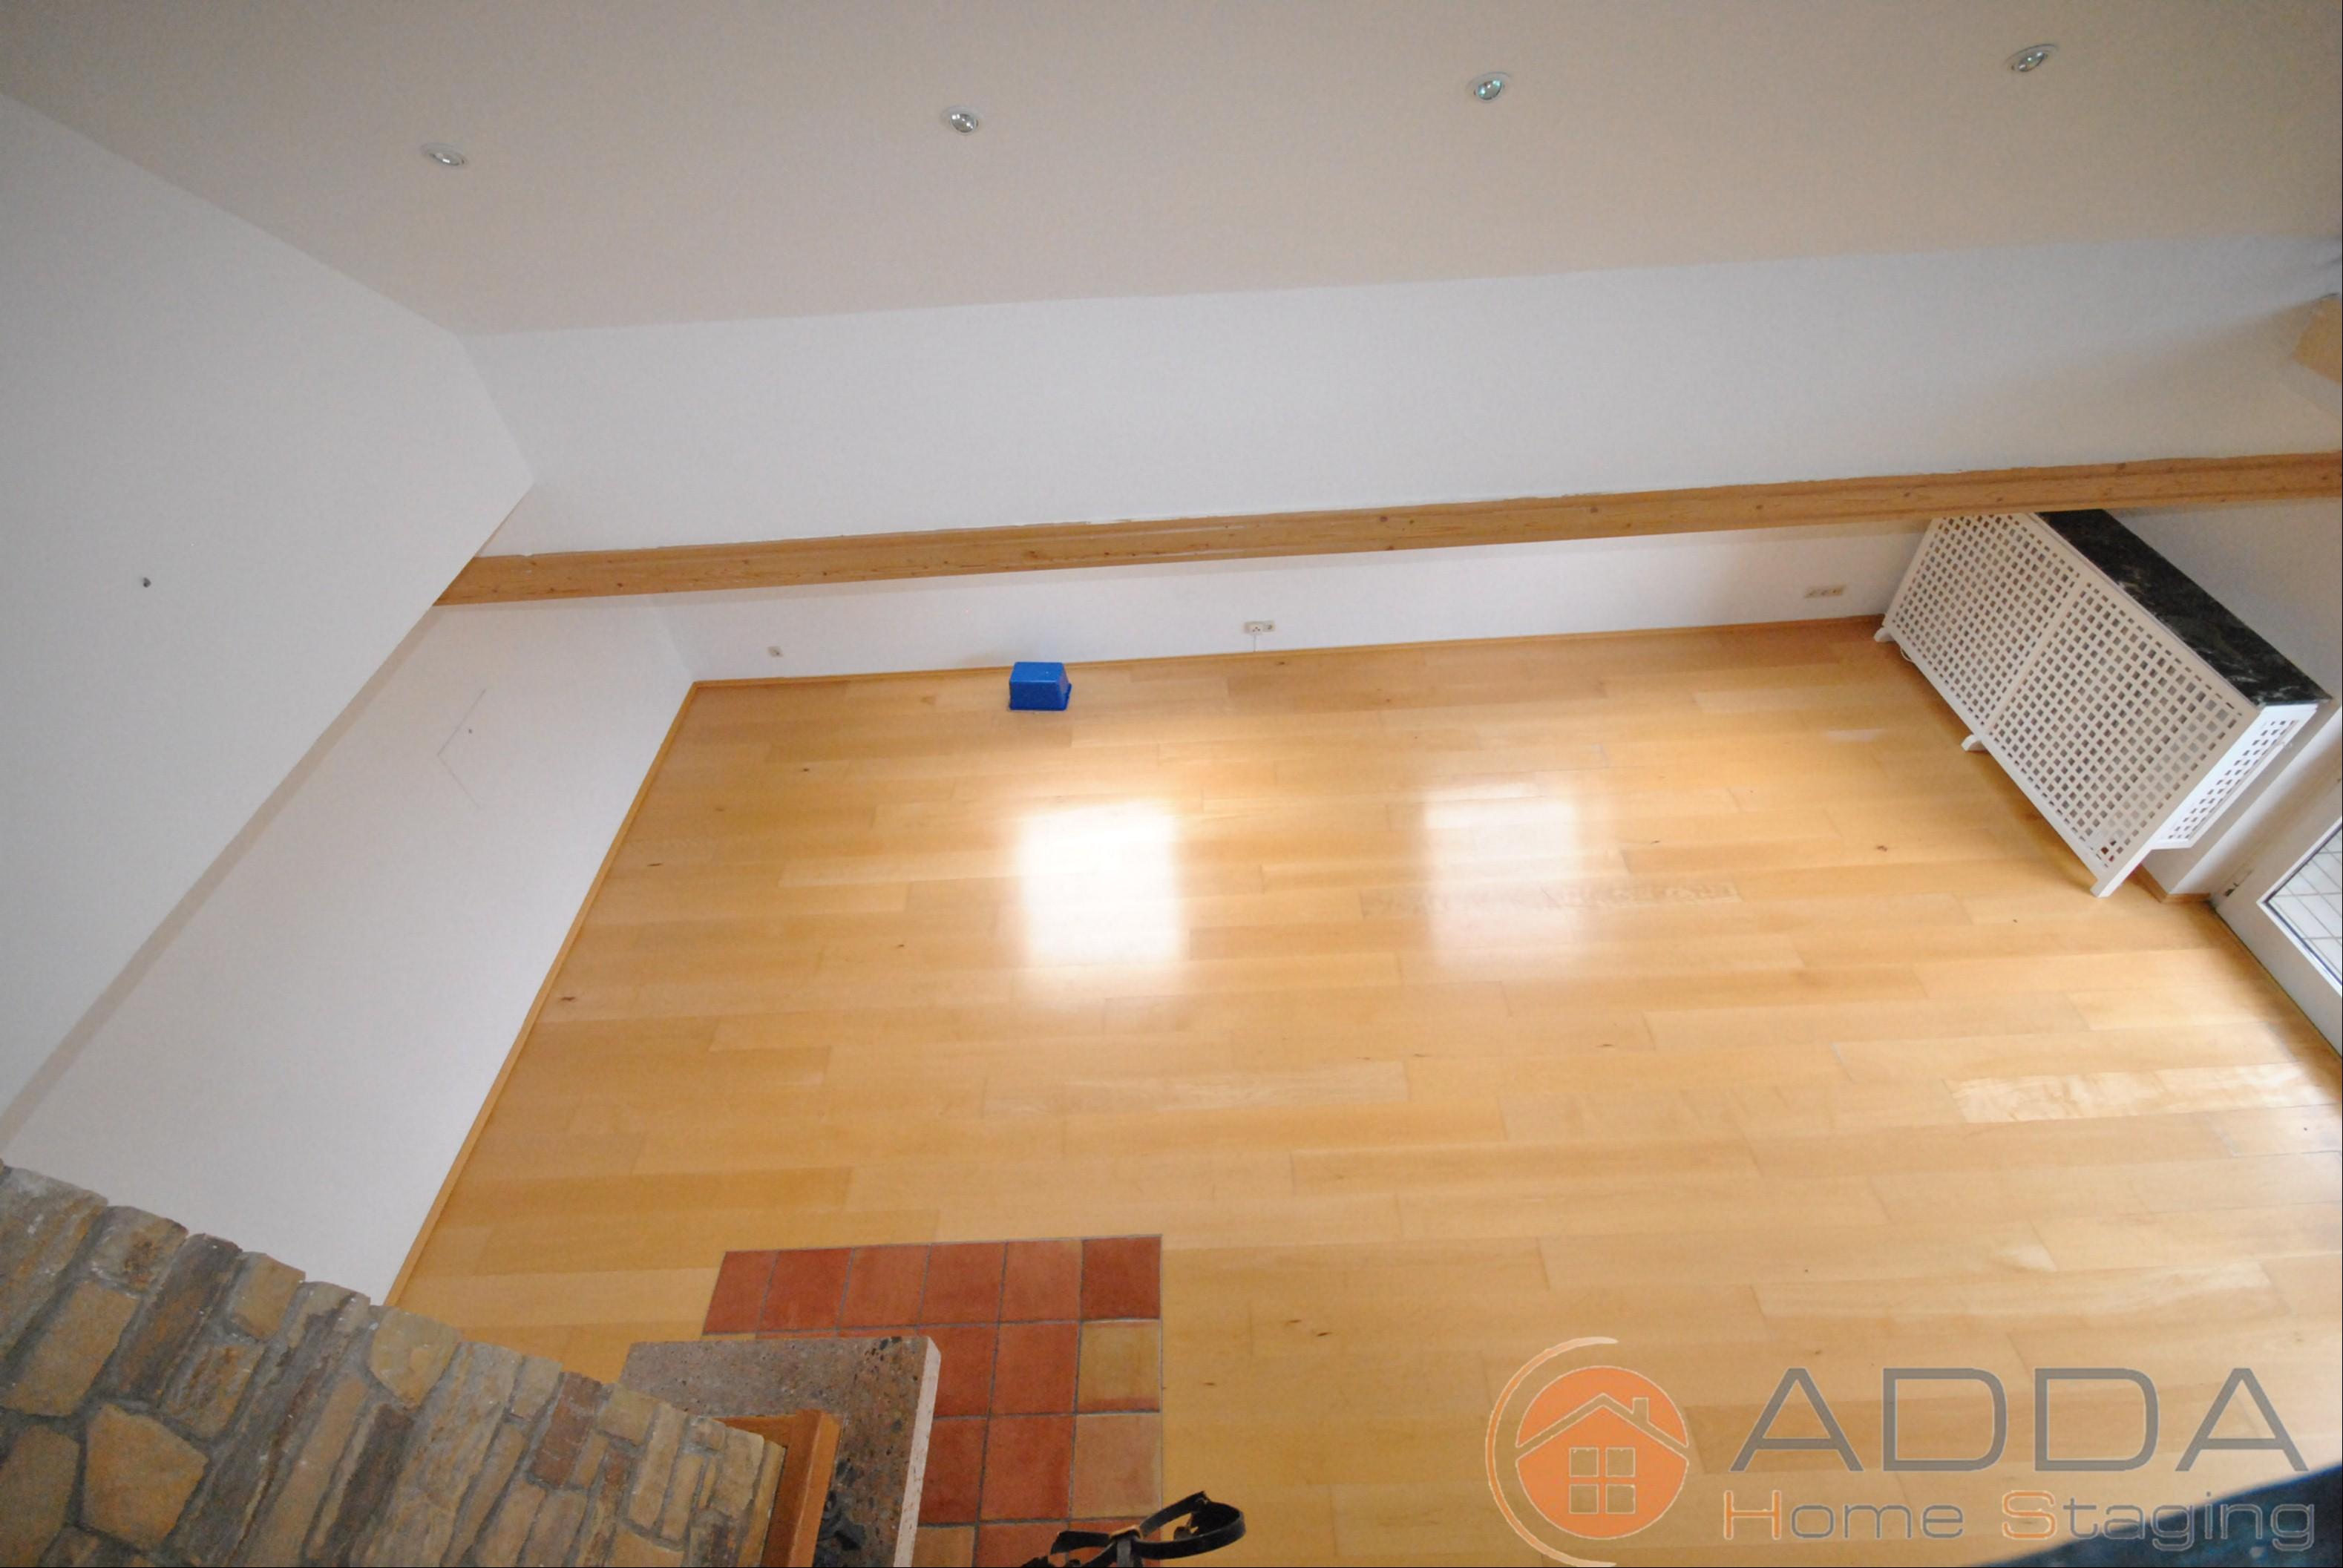 Wohnzimmer vor dem Home Staging #raumgestaltung ©ADDA Home Staging